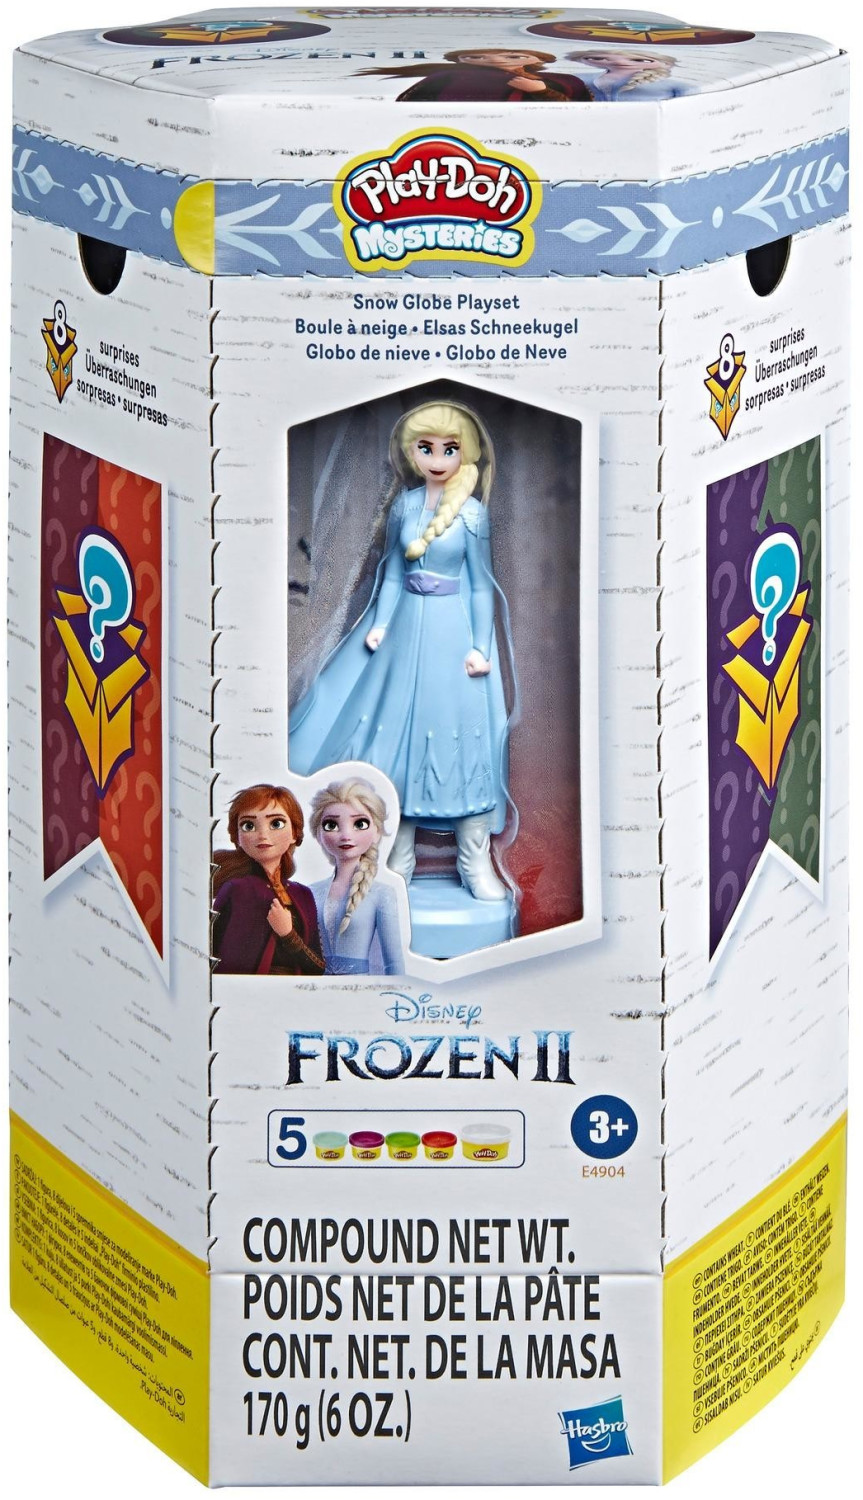 Photos - Creativity Set / Science Kit Play-Doh Disney Frozen II Snow Globe Playset 